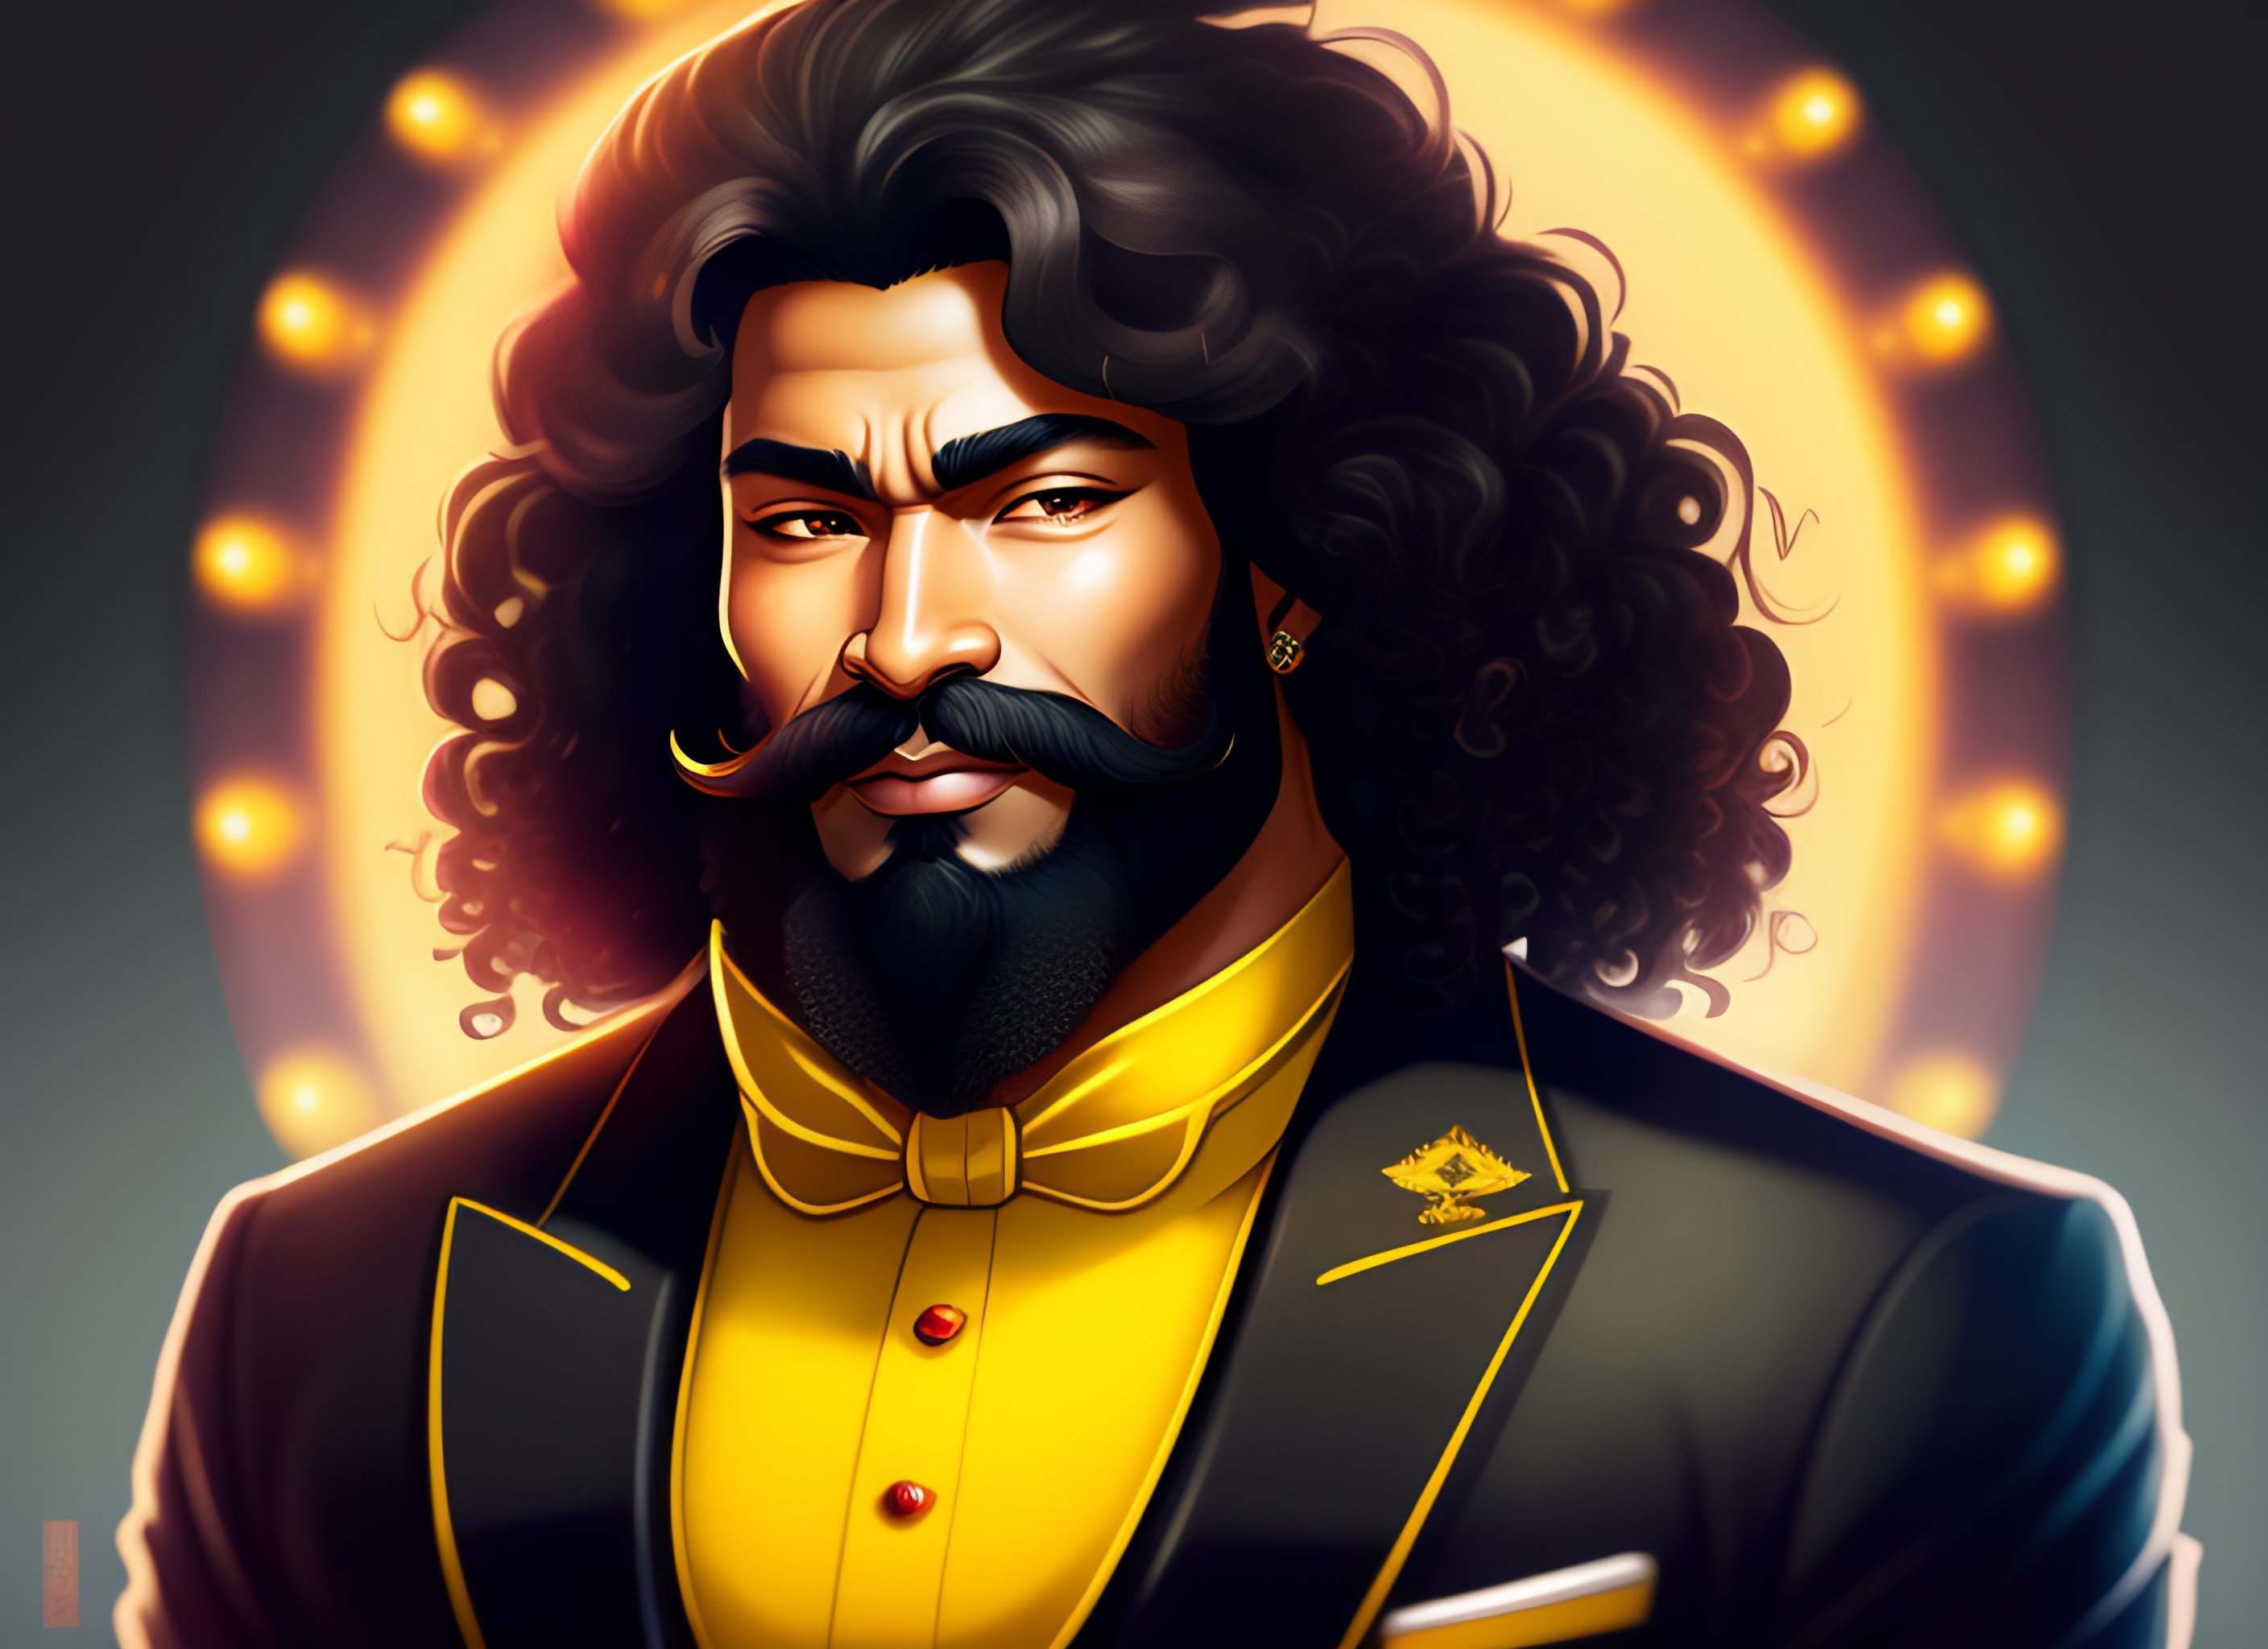 Lexica - Anime warrior king, 42 years old, black long hair, long